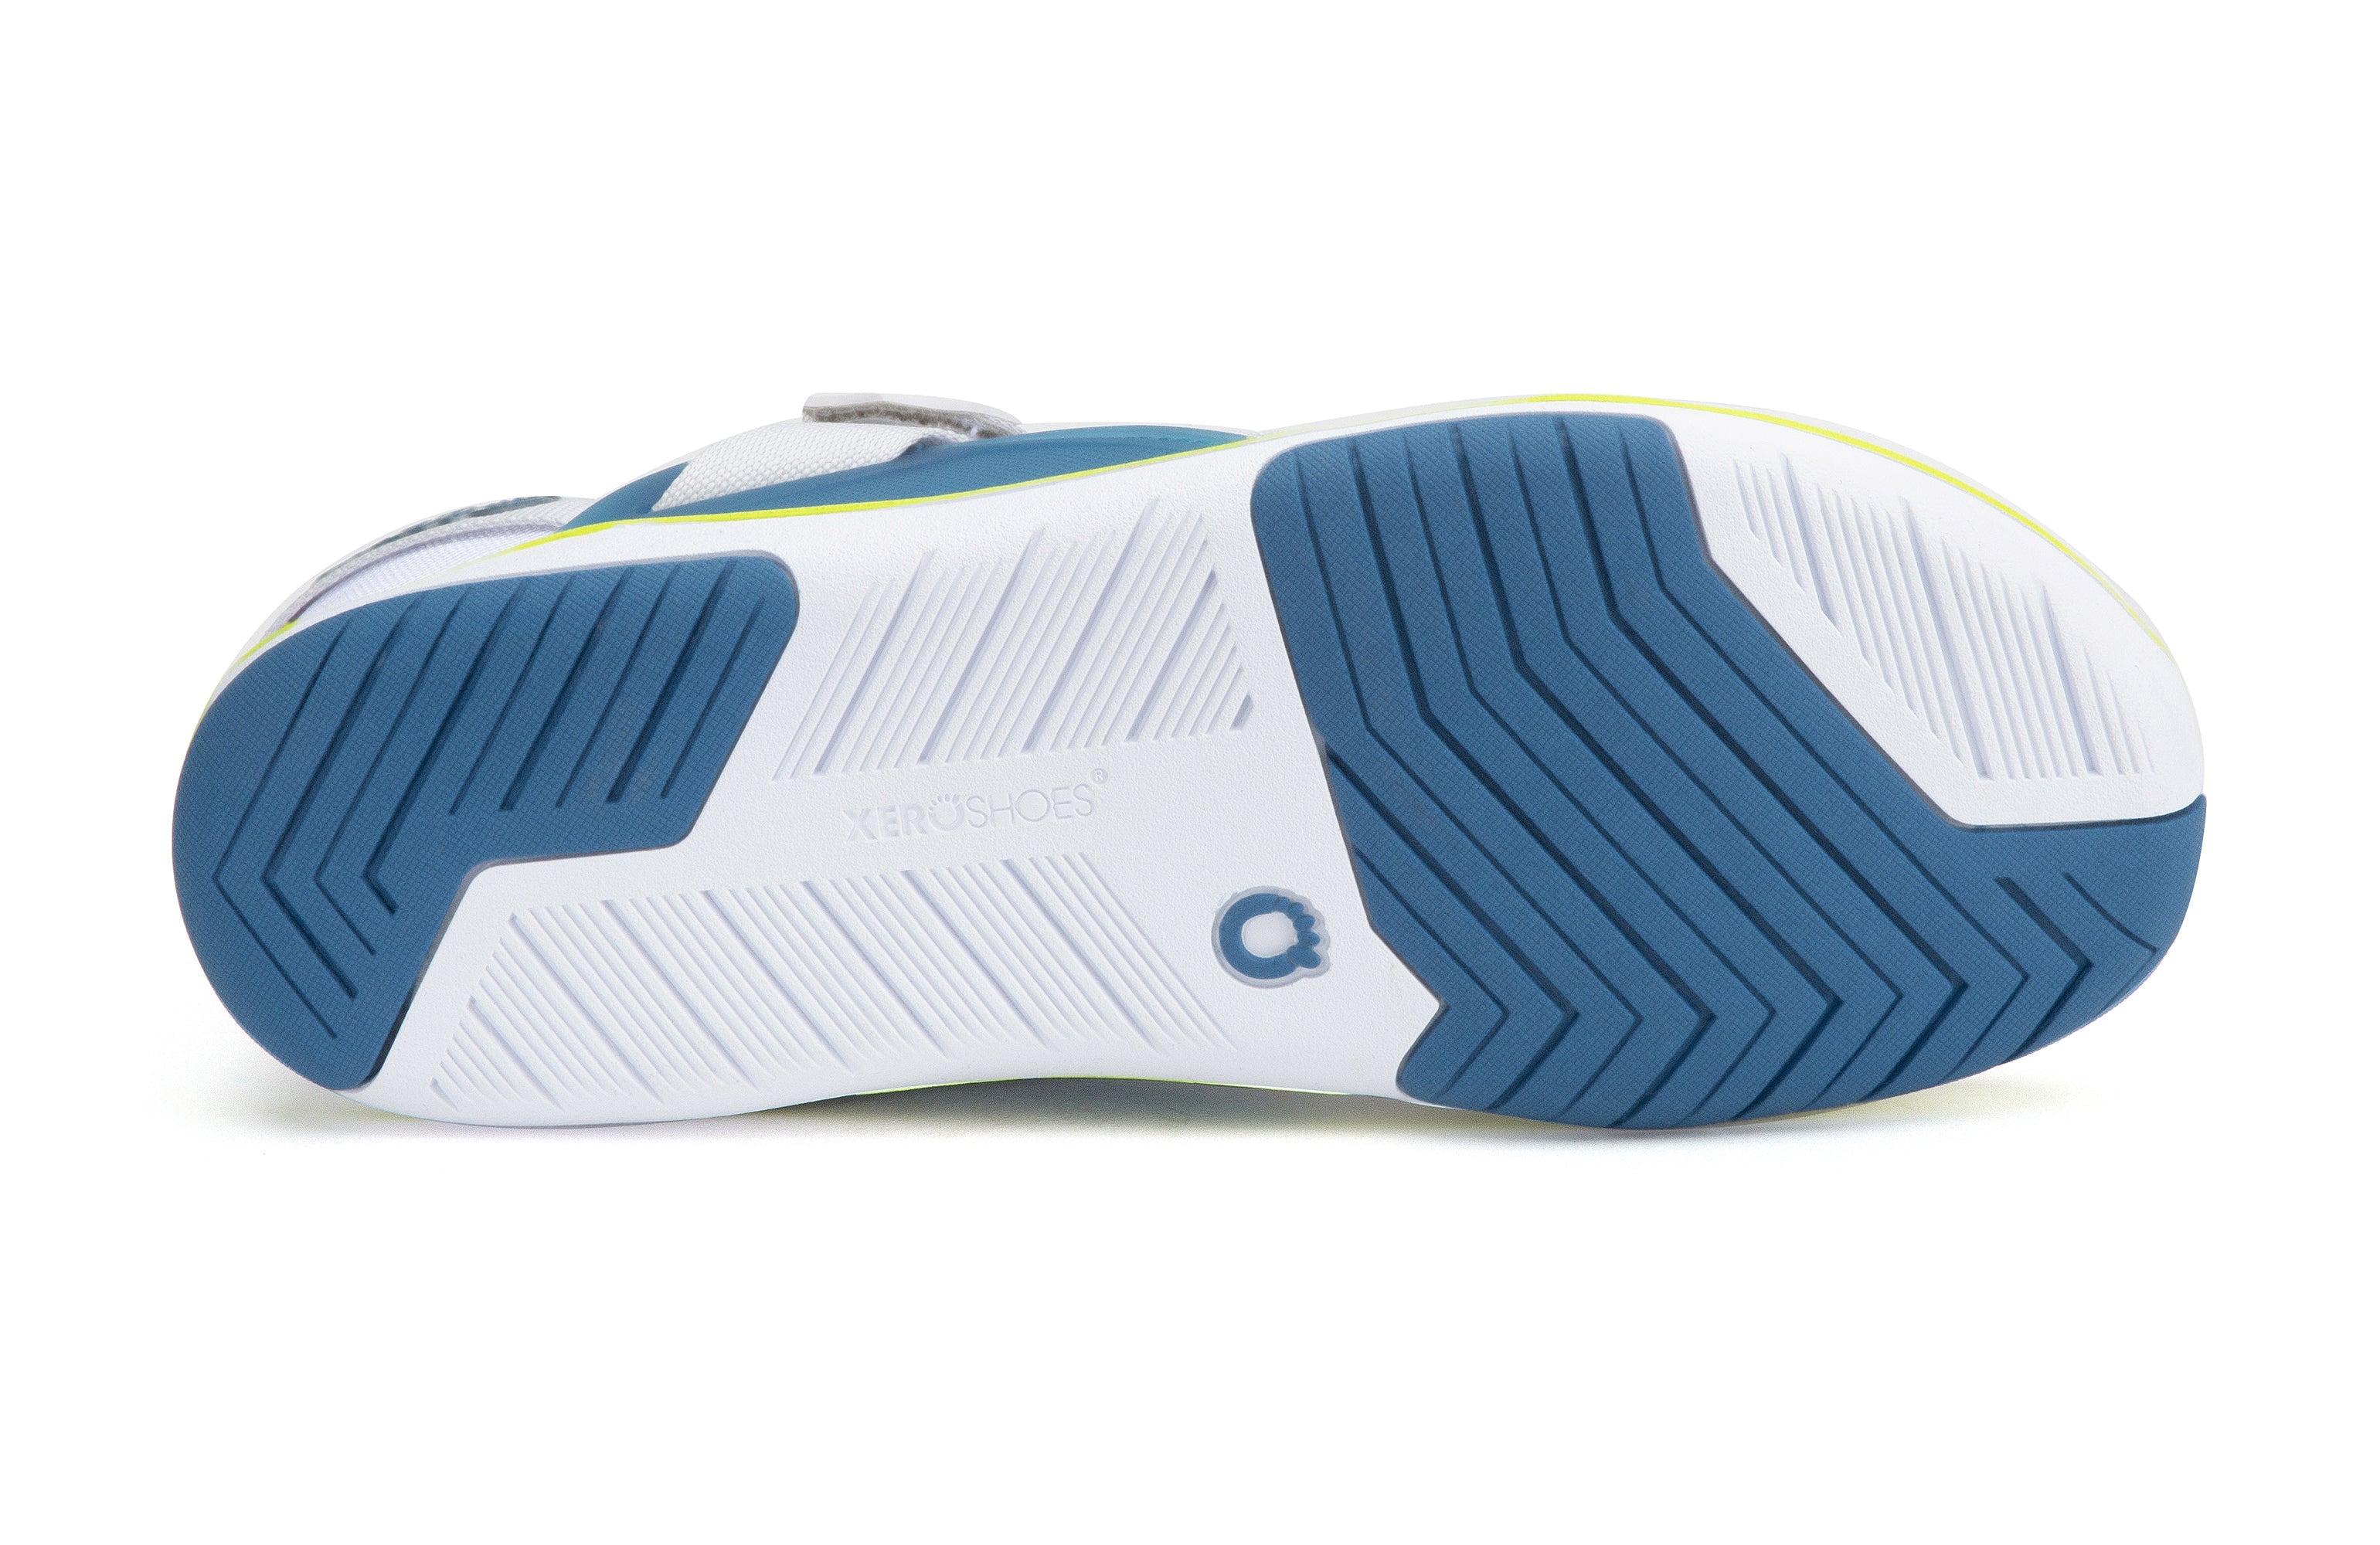 Xero Shoes Forza Trainer Mens barfods træningssko til mænd i farven white / blue sapphire, saal